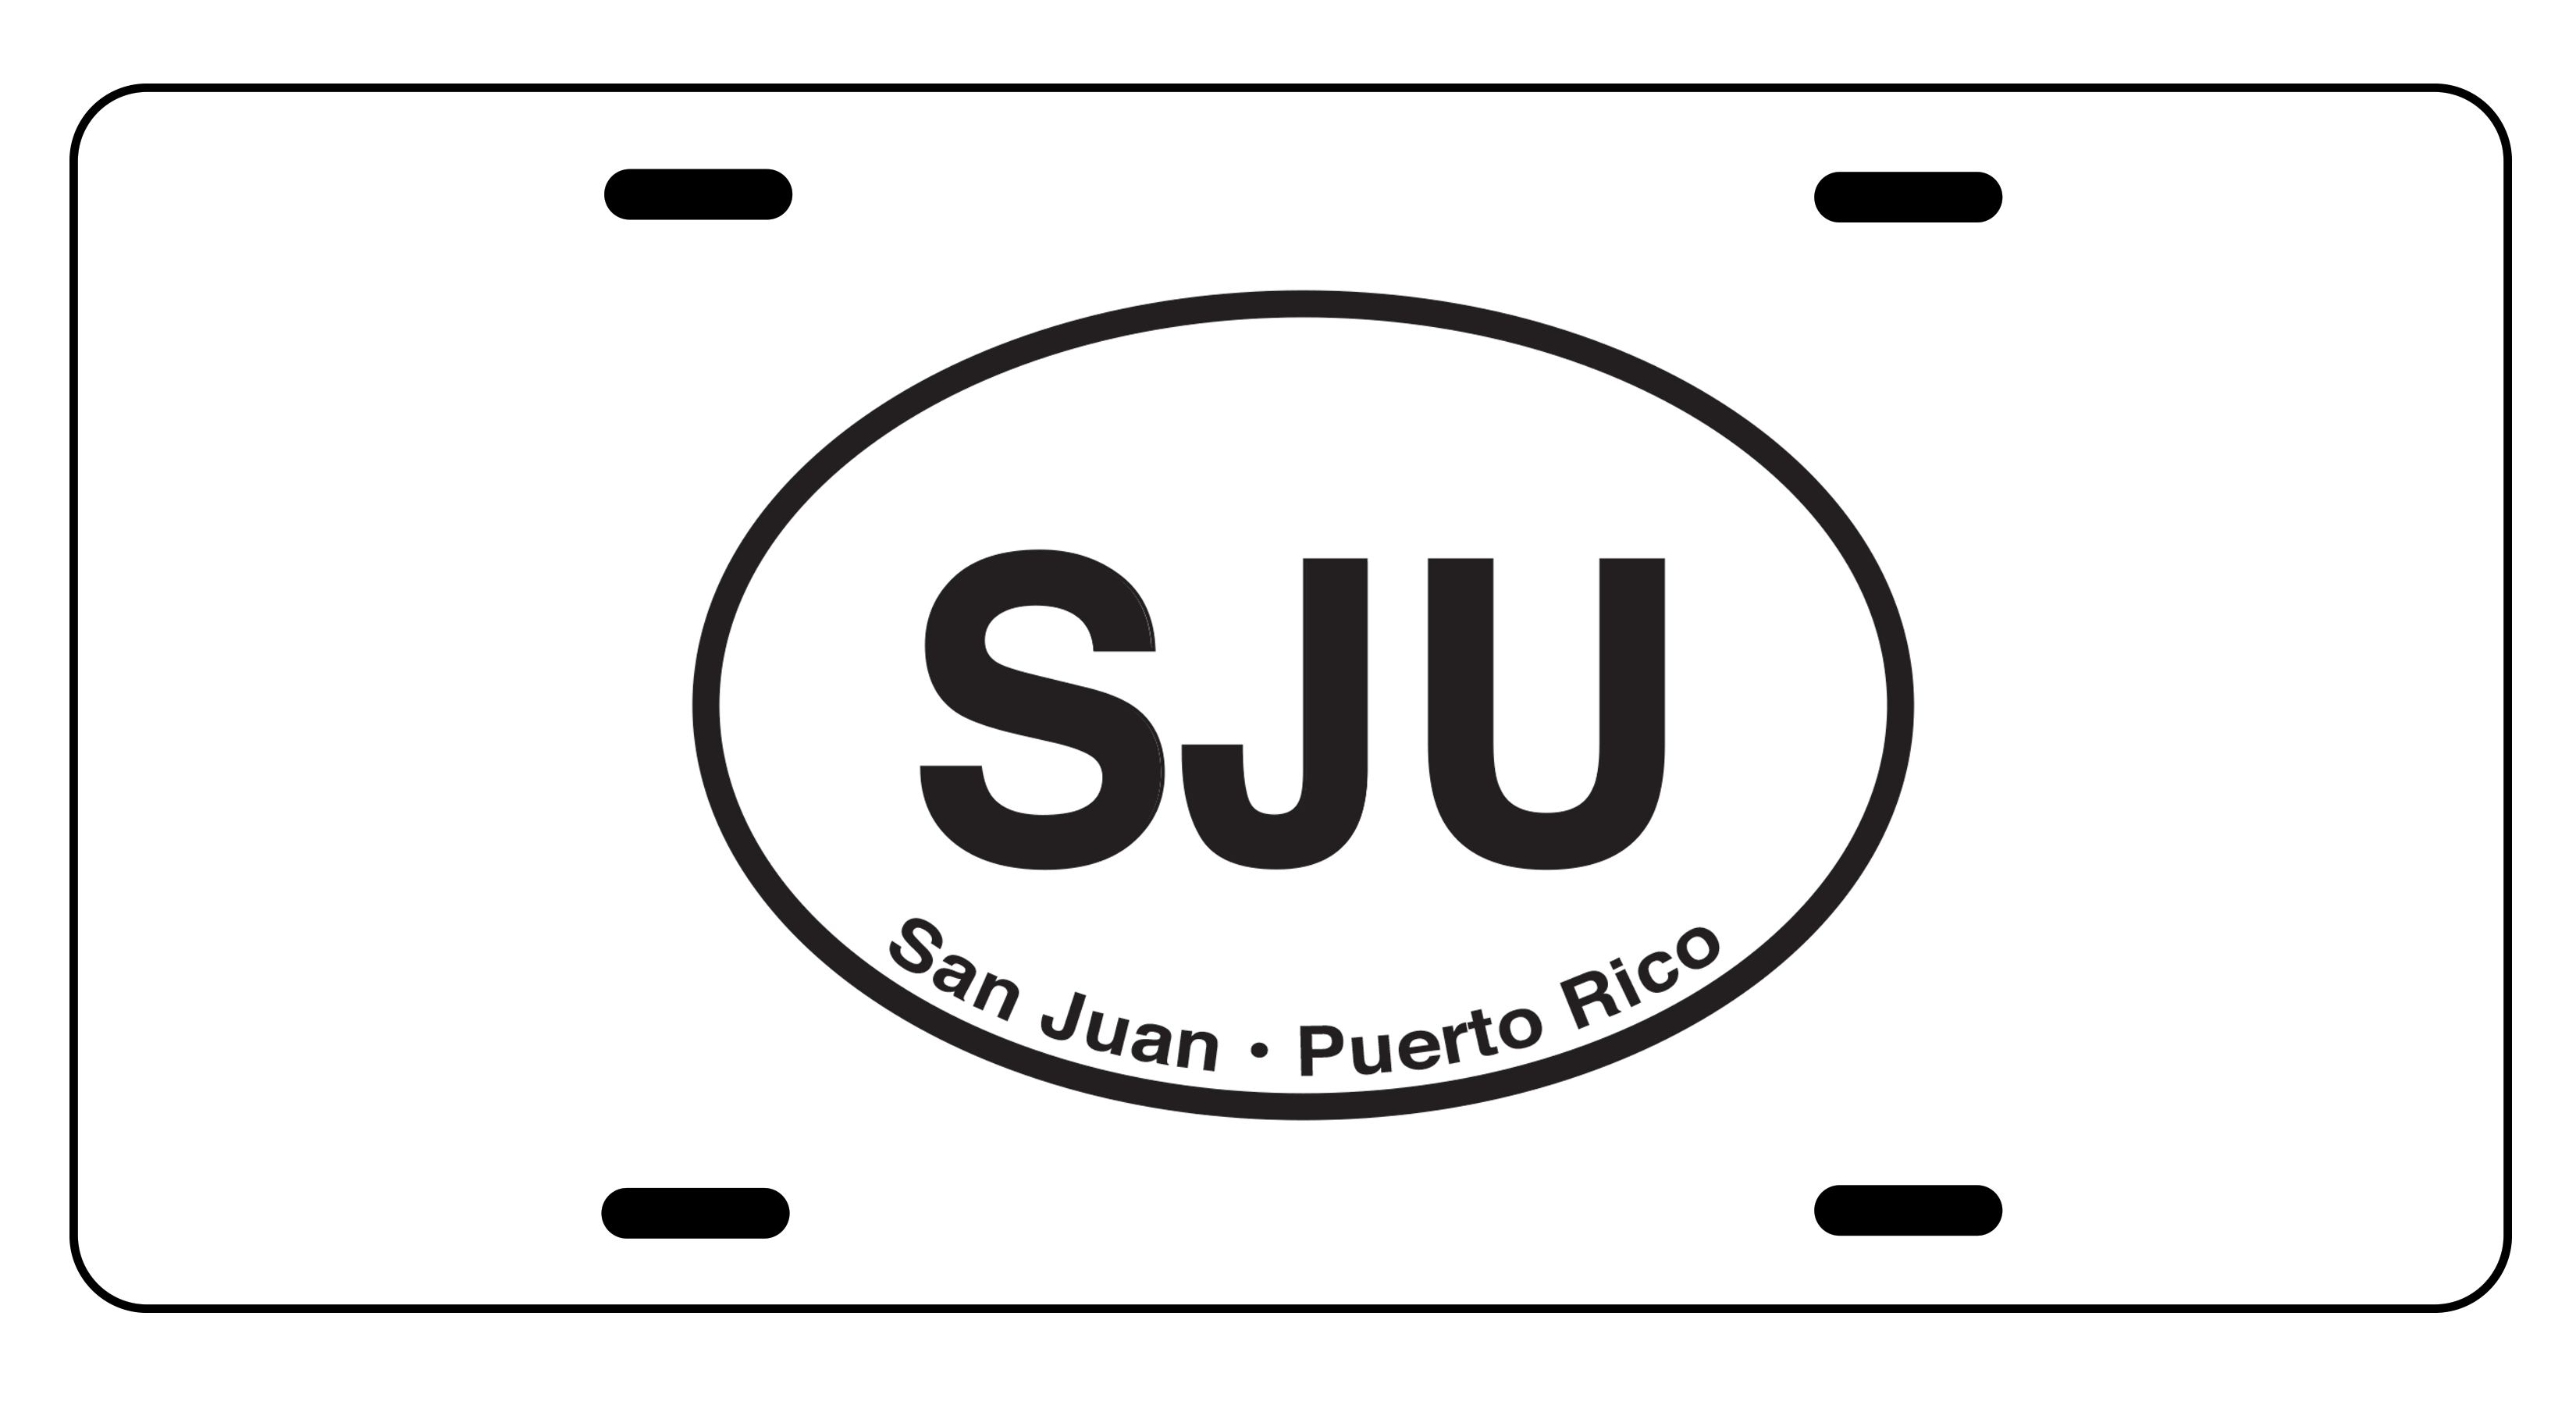 San Juan License Plates - My Destination Location